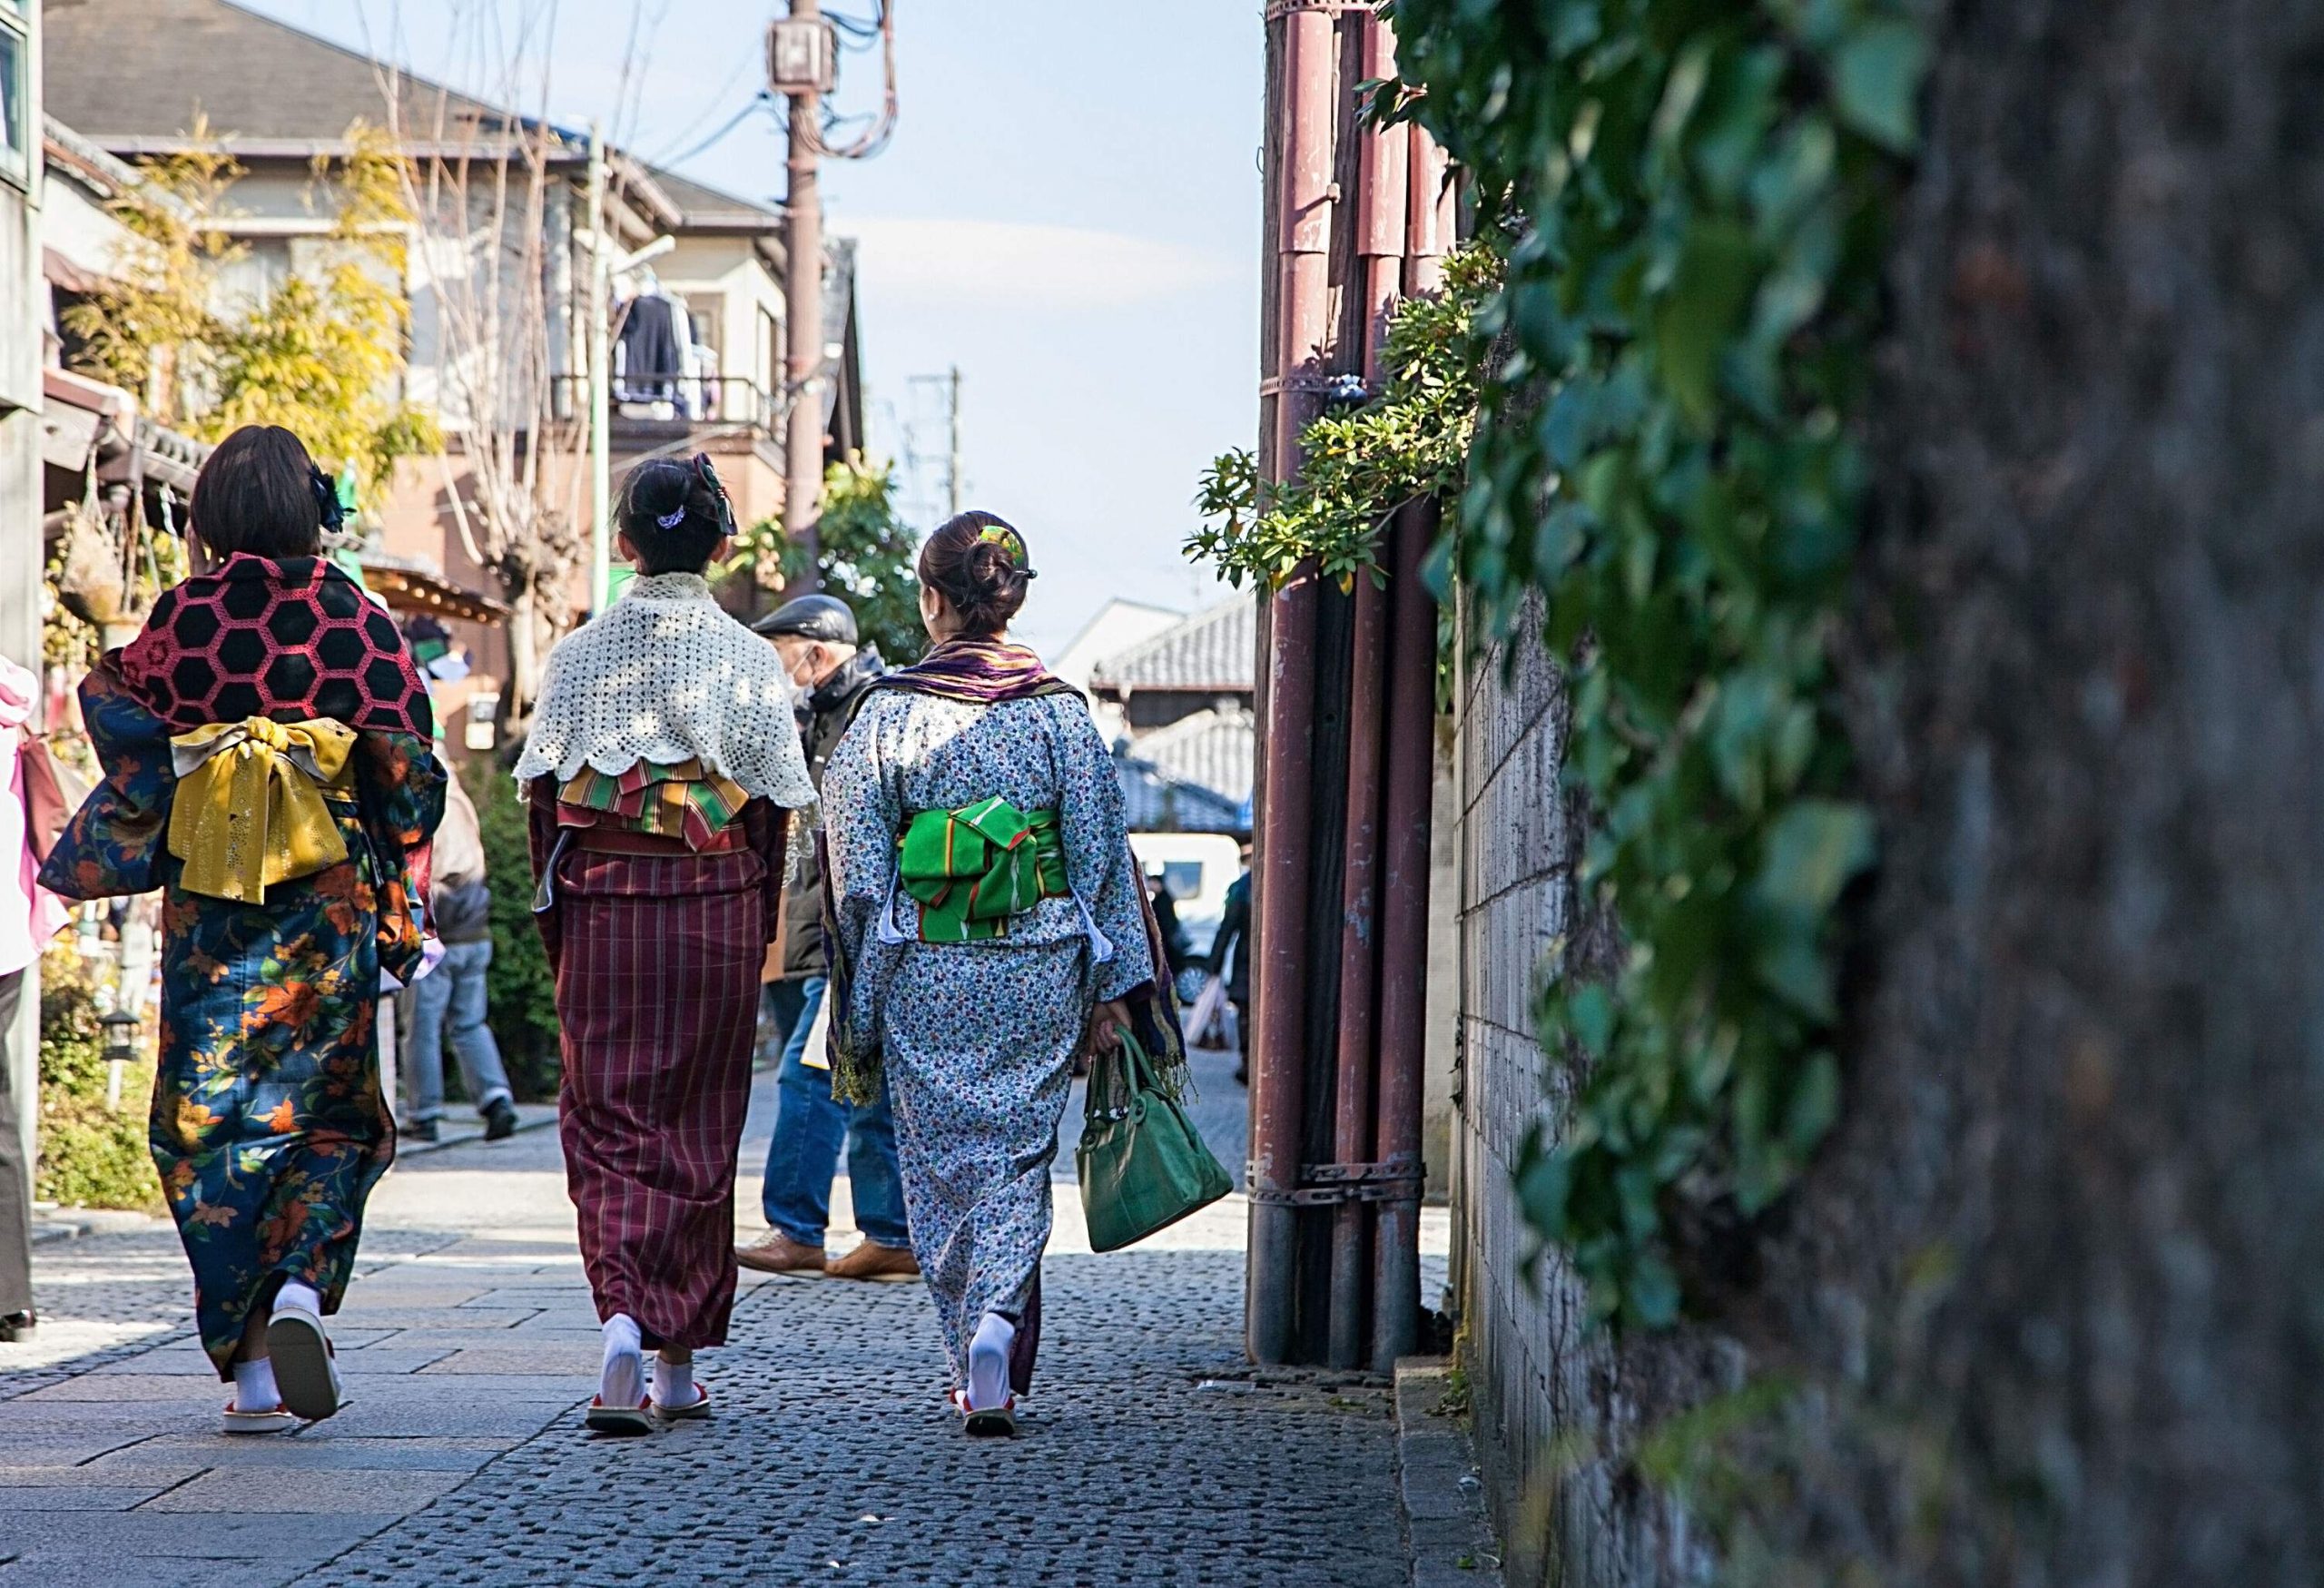 Three women wear colourful kimonos as they walk on a street in a residential neighbourhood.